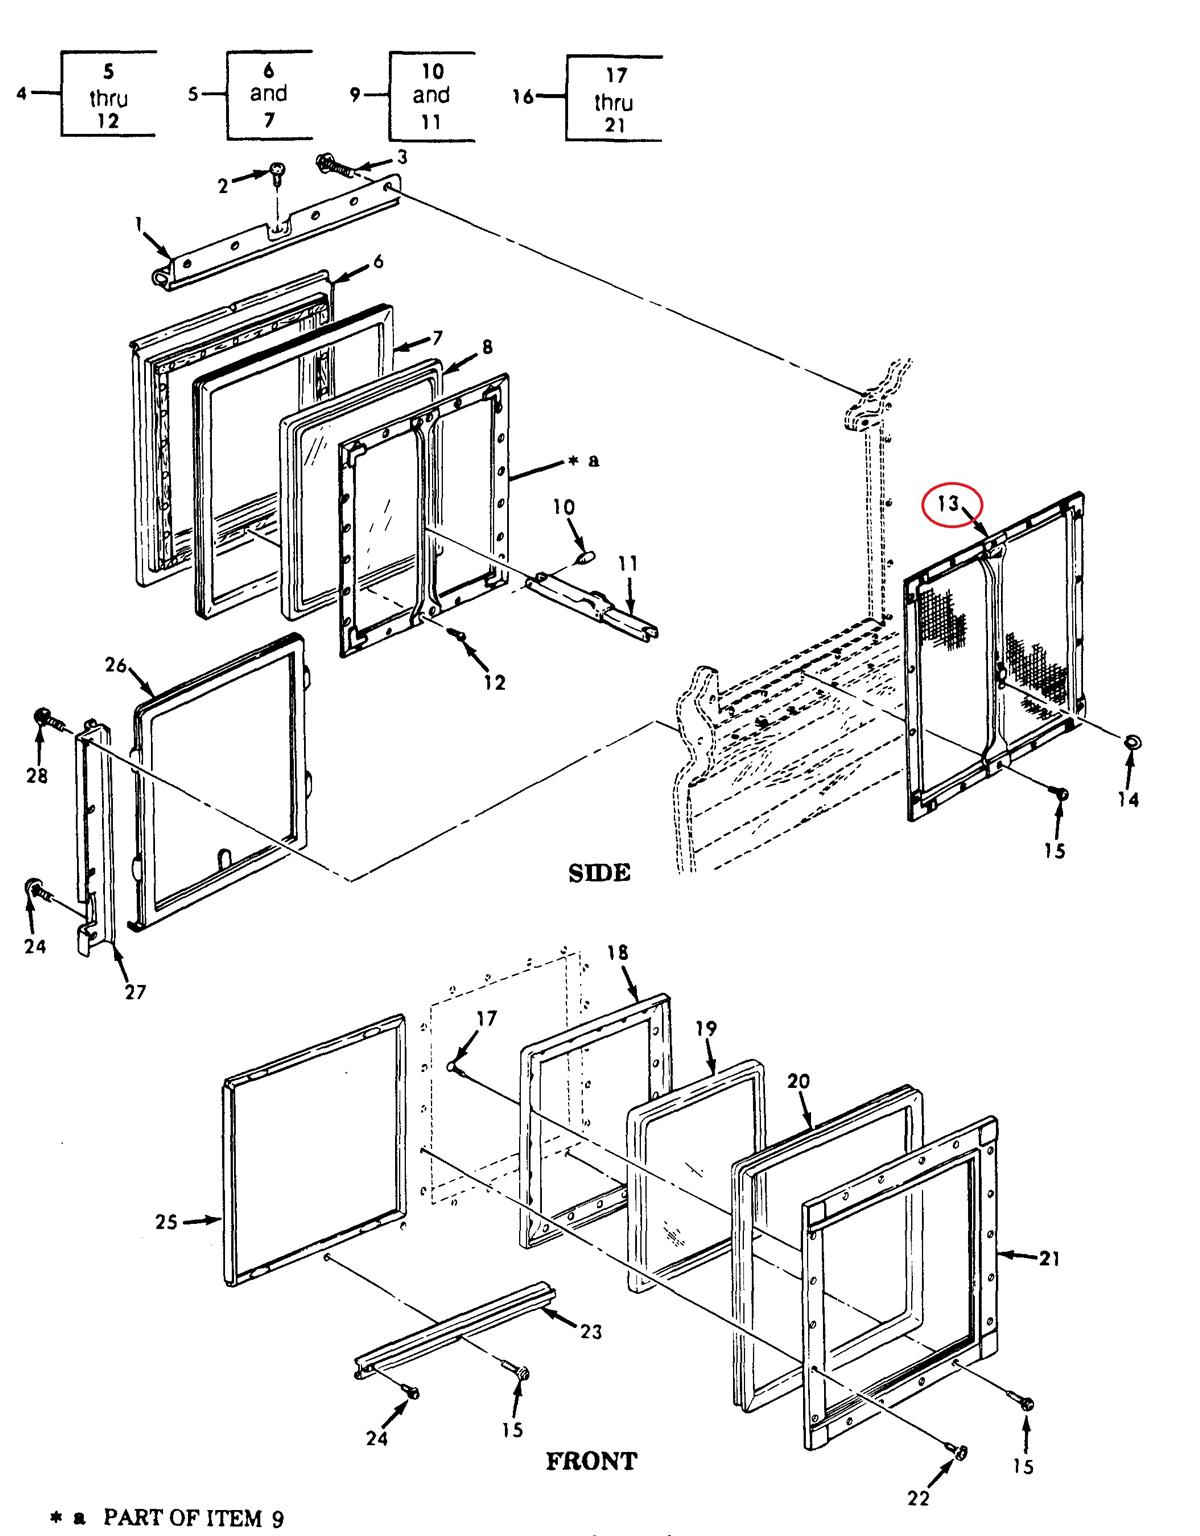 M35-697 | M35-697 2 1-2 Ton Van Body Window Screens Parts Diagram.jpg